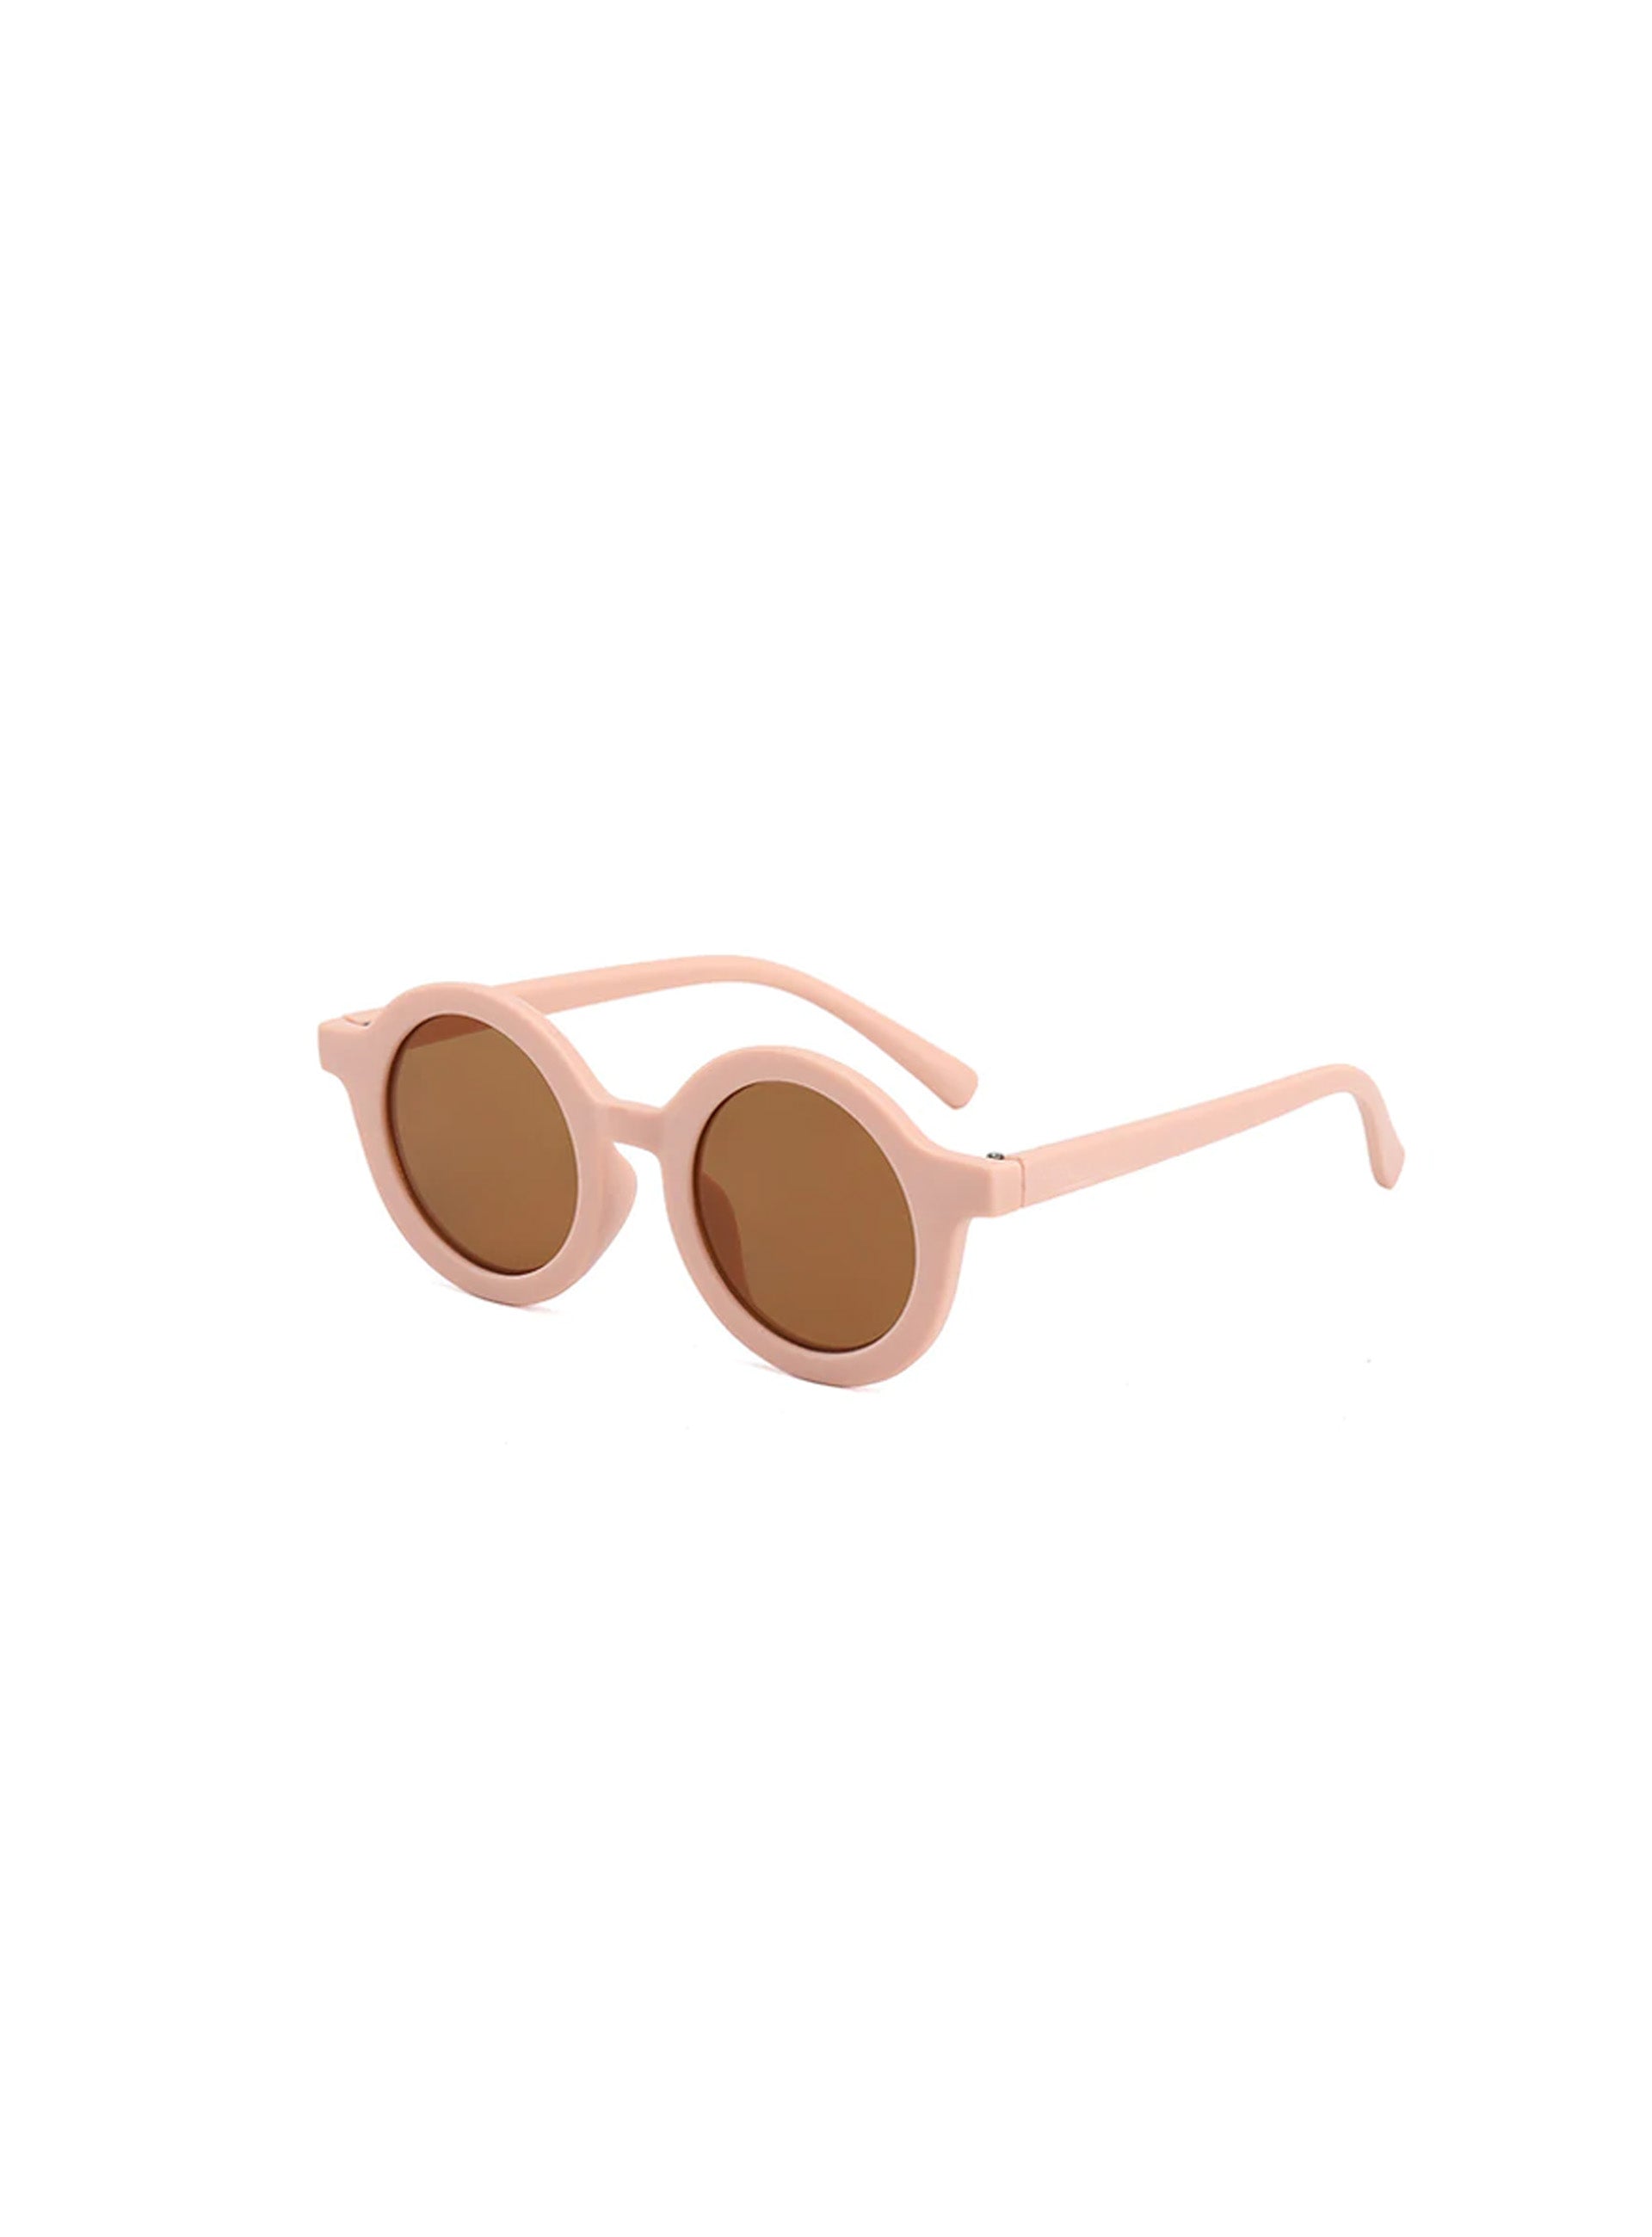 blush pink round sunglasses